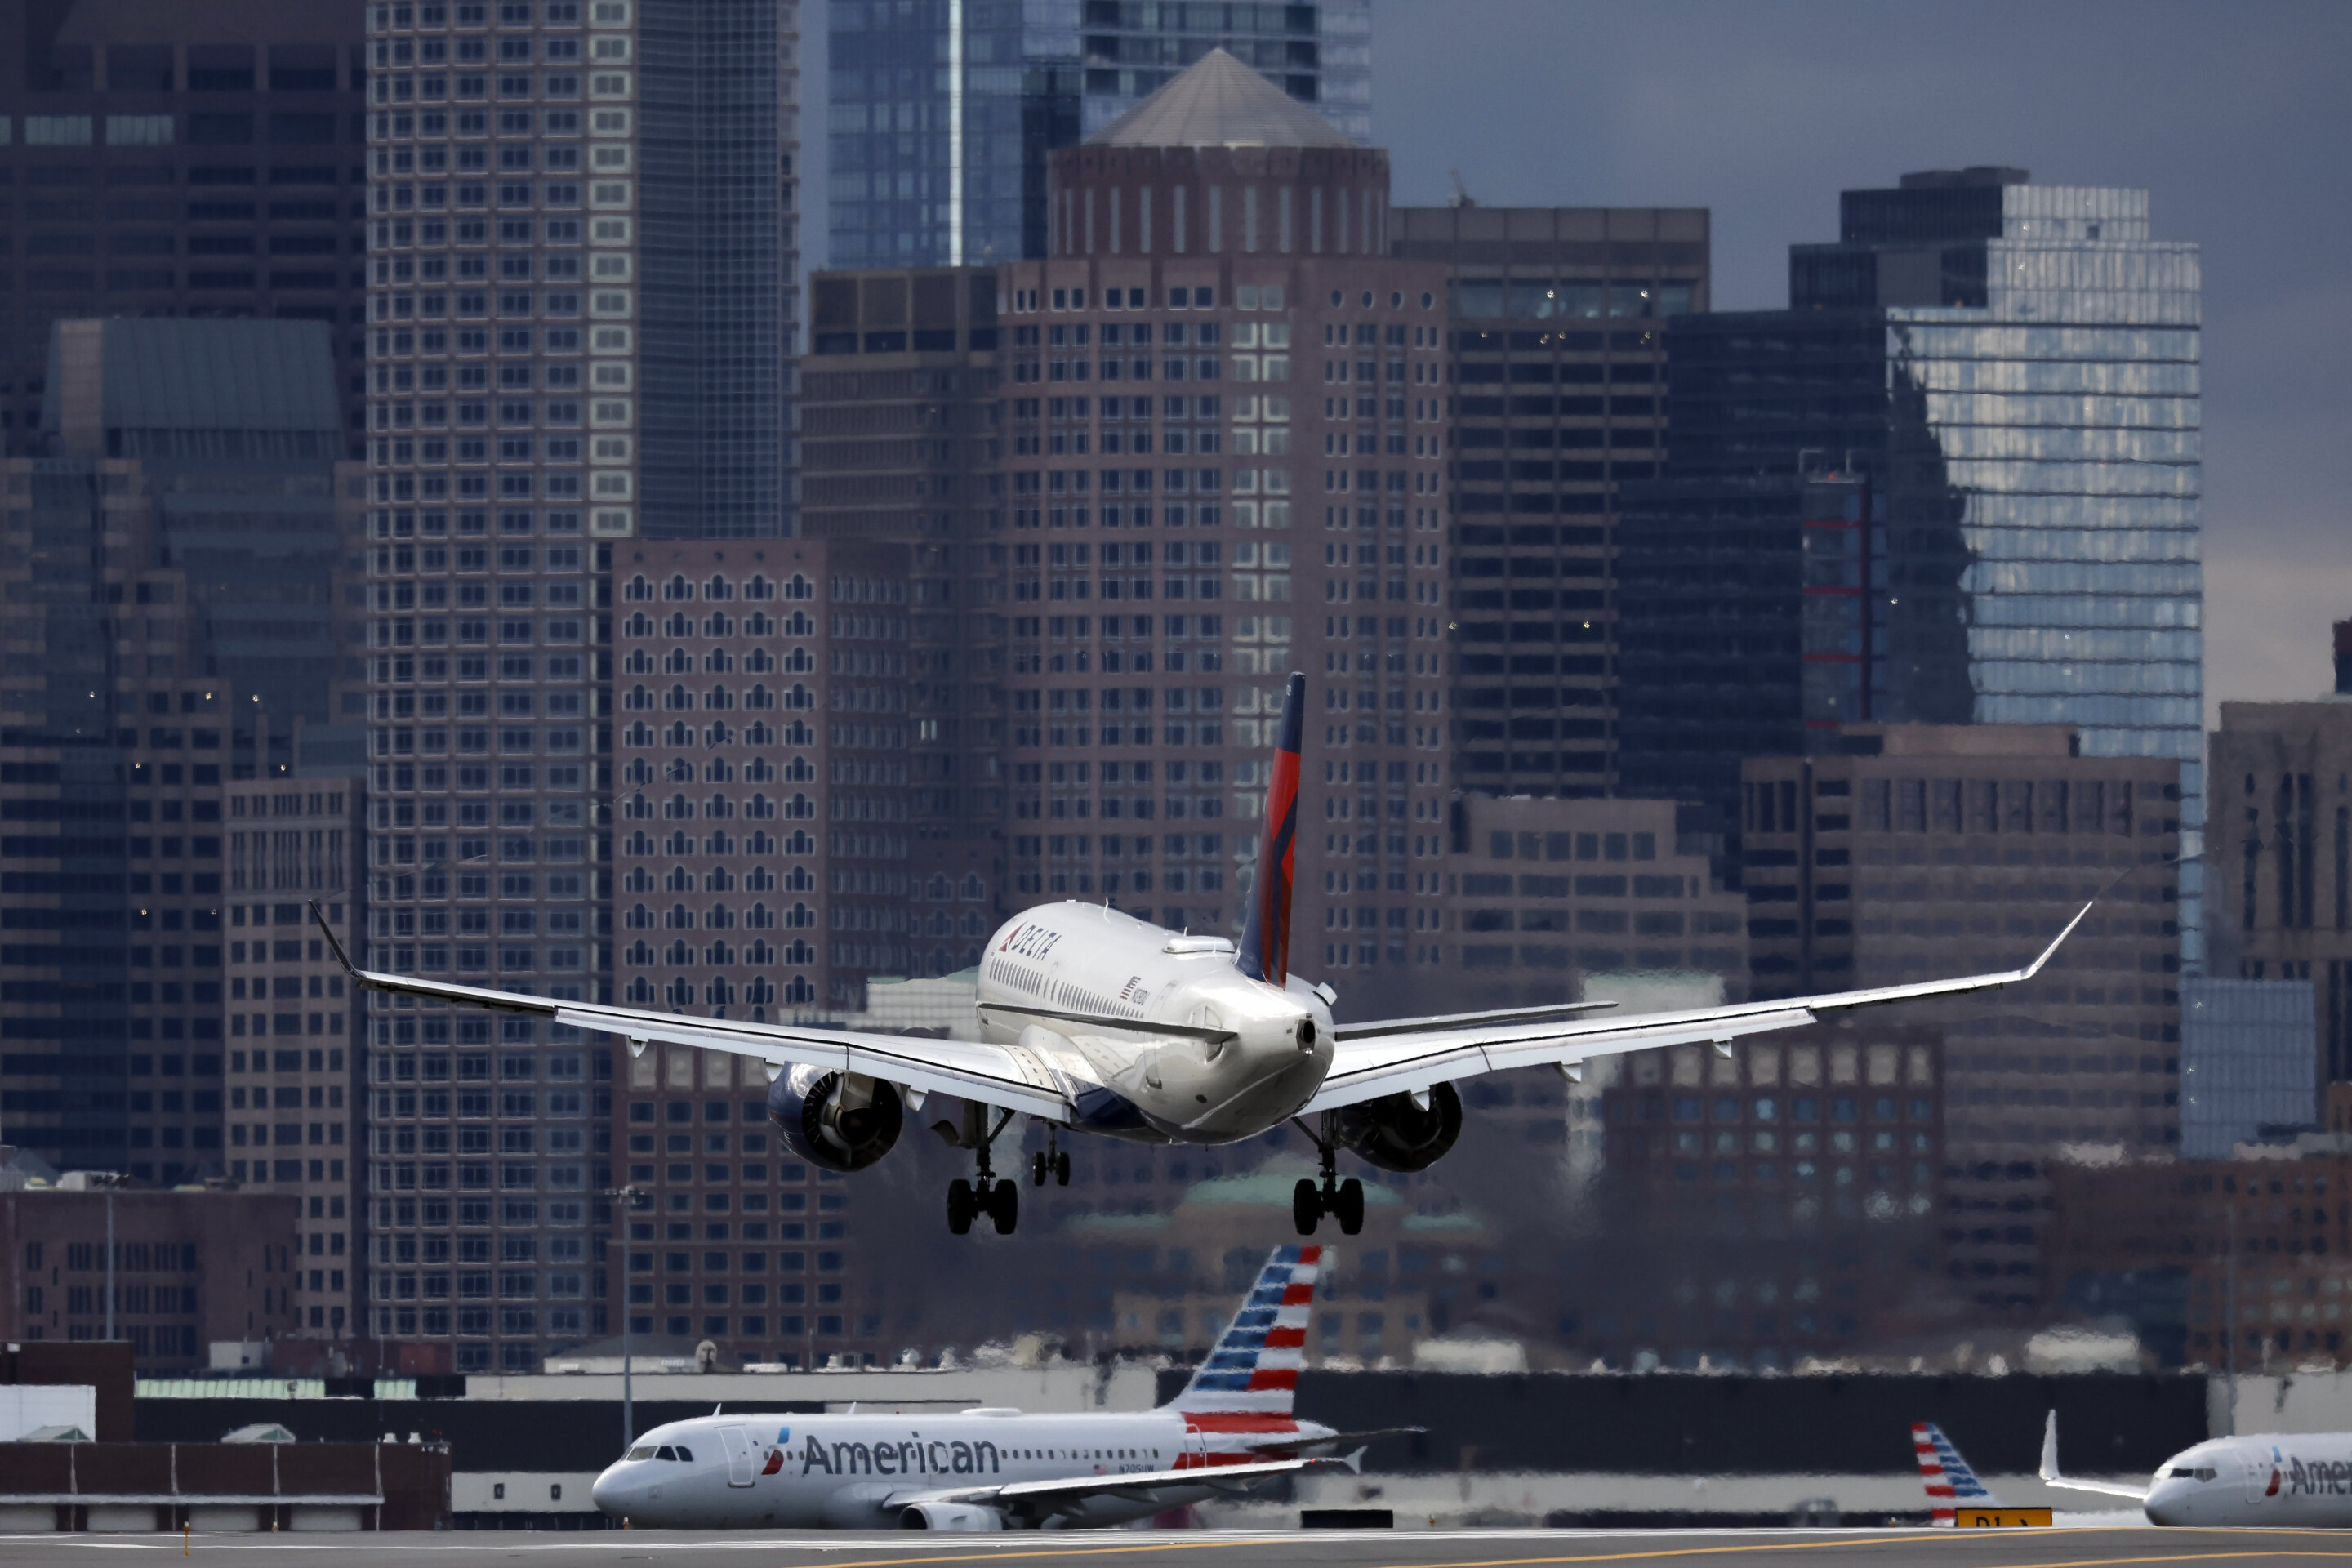 FAA says technology will help avoid some dangerous landings